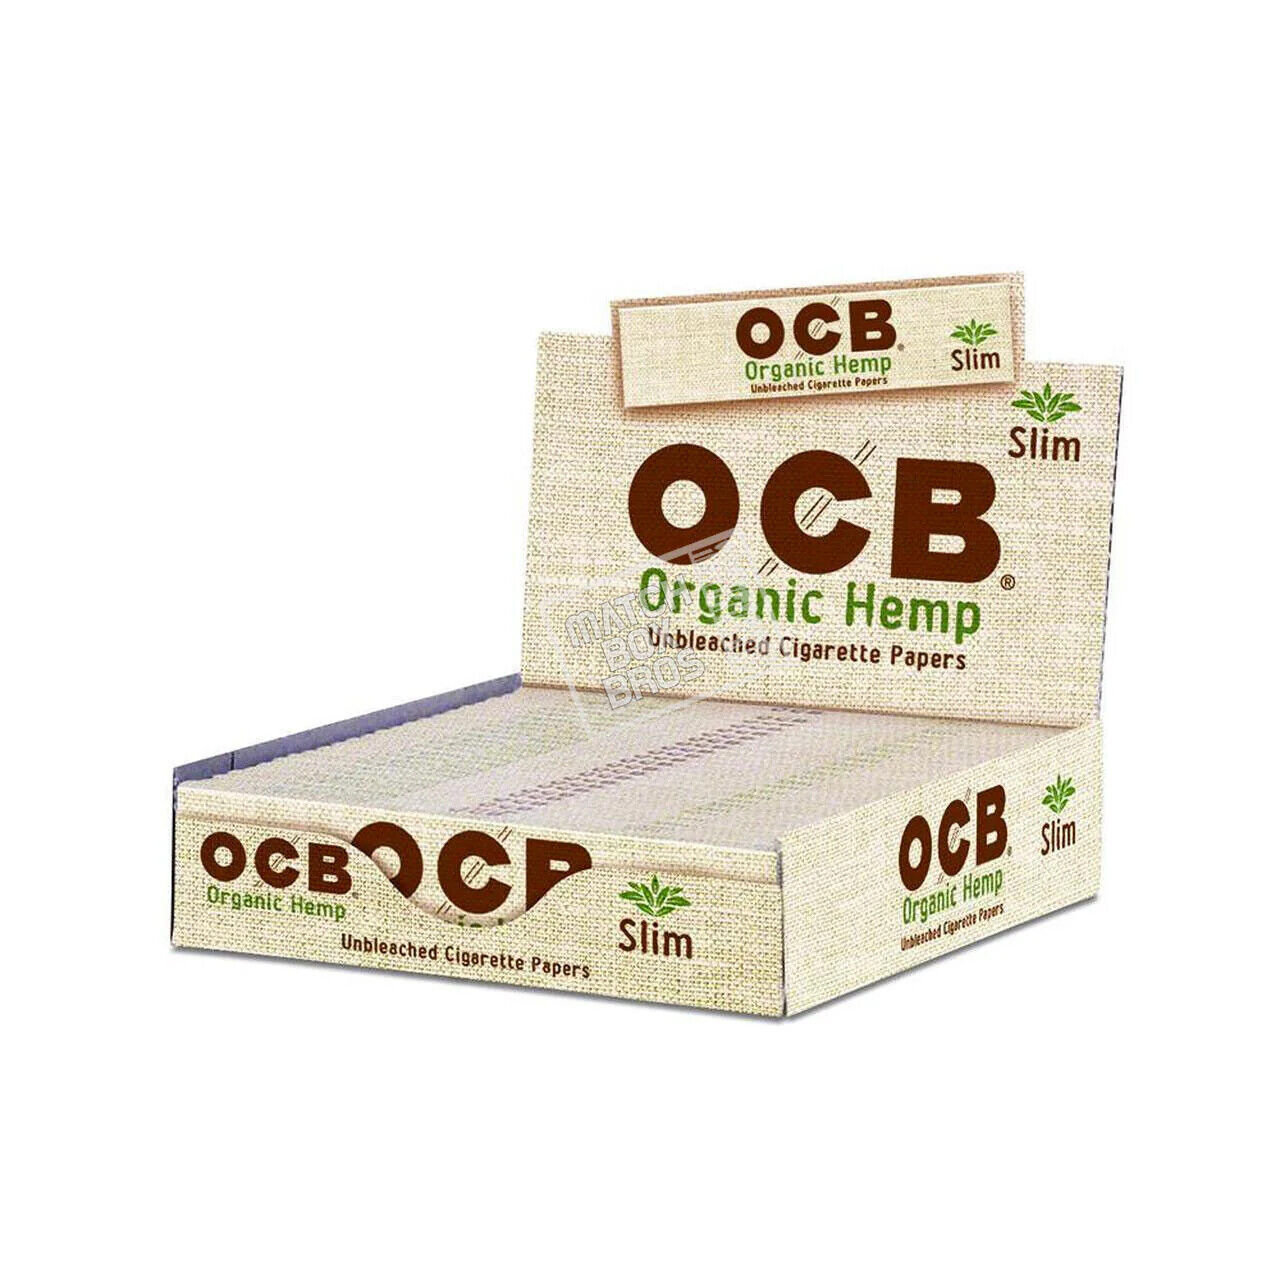 OCB Organic Hemp Rolling Papers Slim Unbleached (Full Box of 24 Booklets)